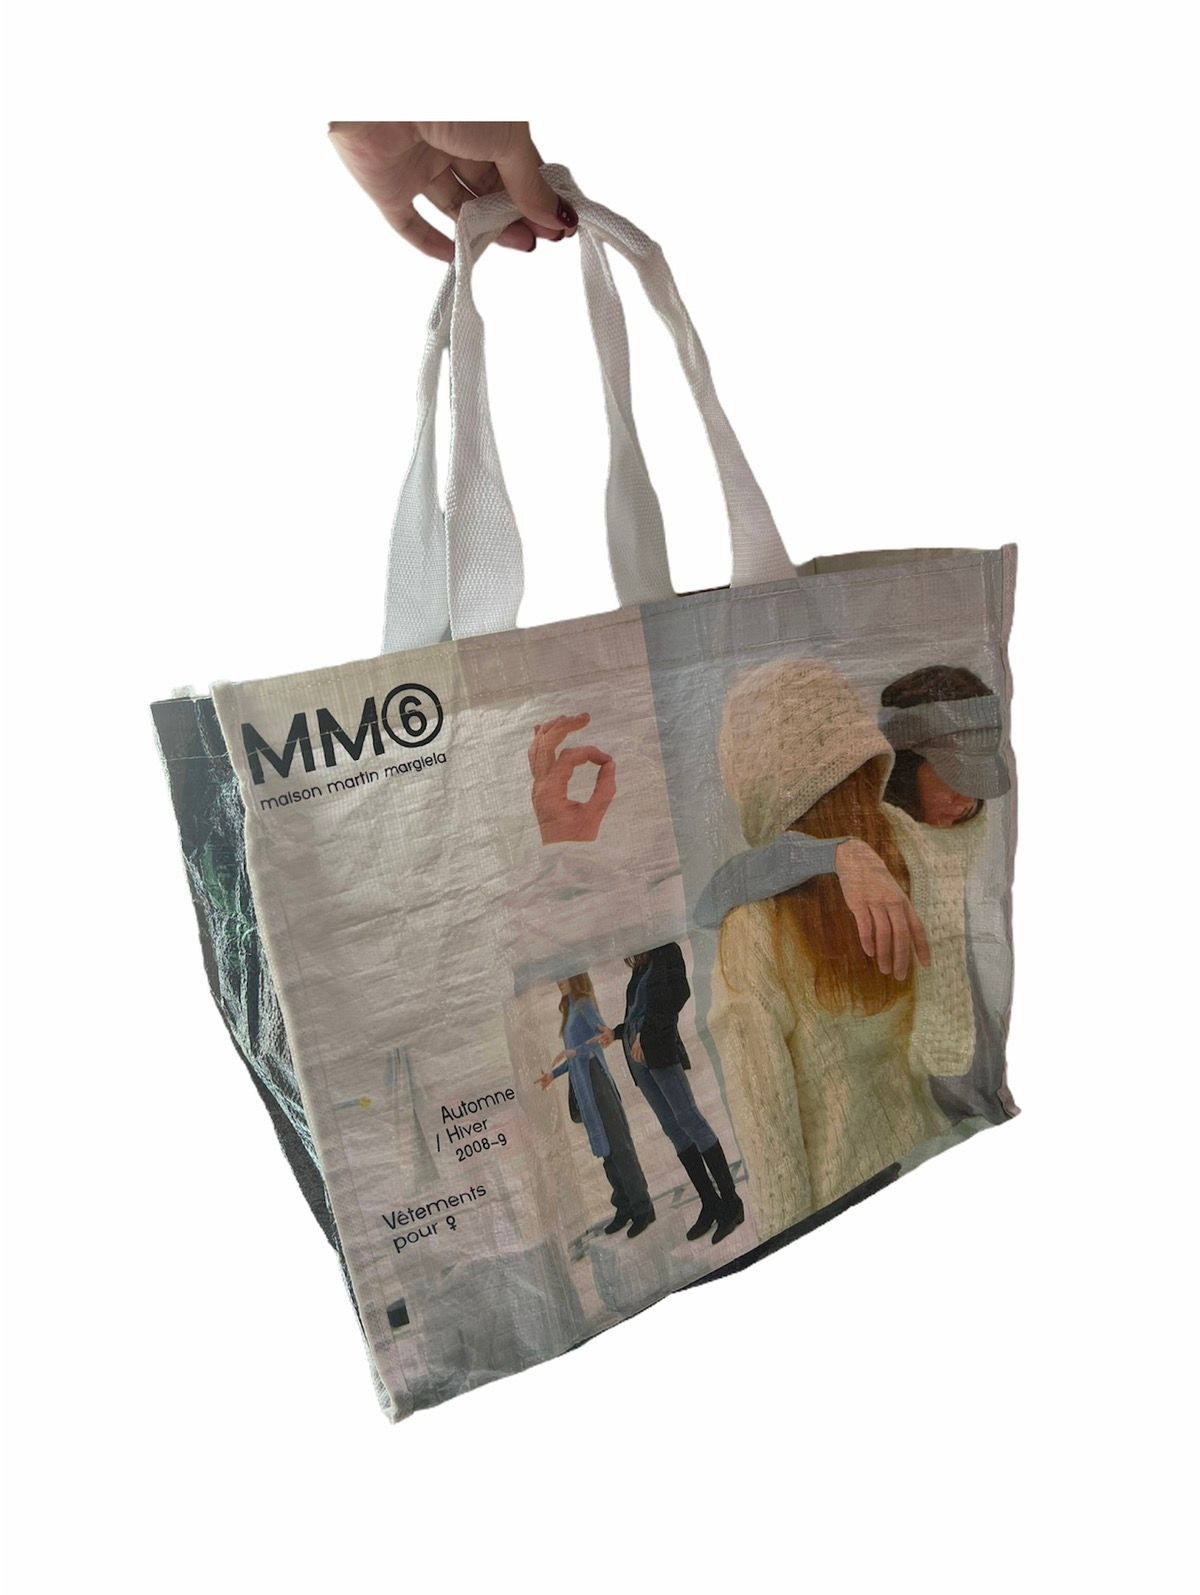 Vintage MM6 2008 Special edition shopper tote bag